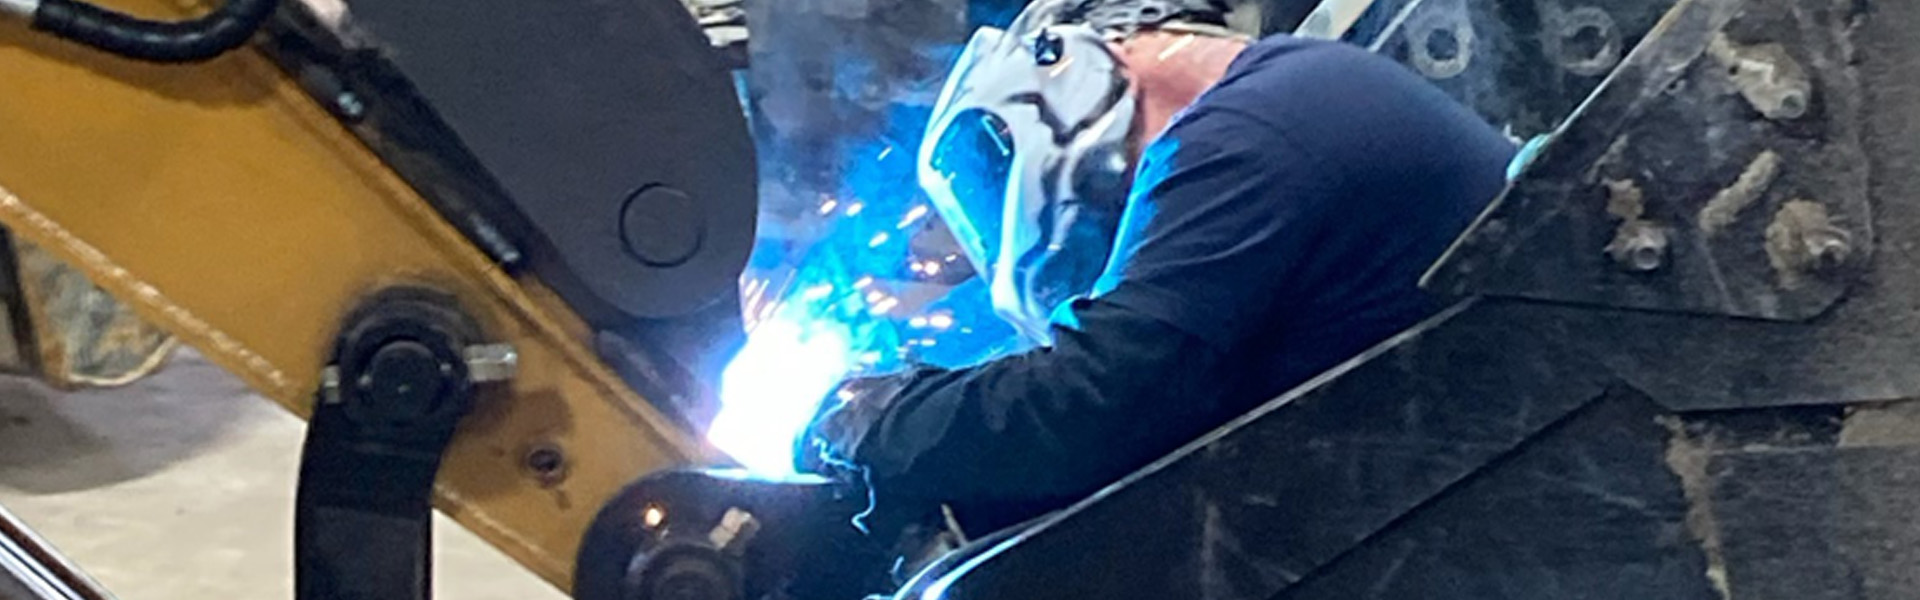 Equipment Repair at Iron Source